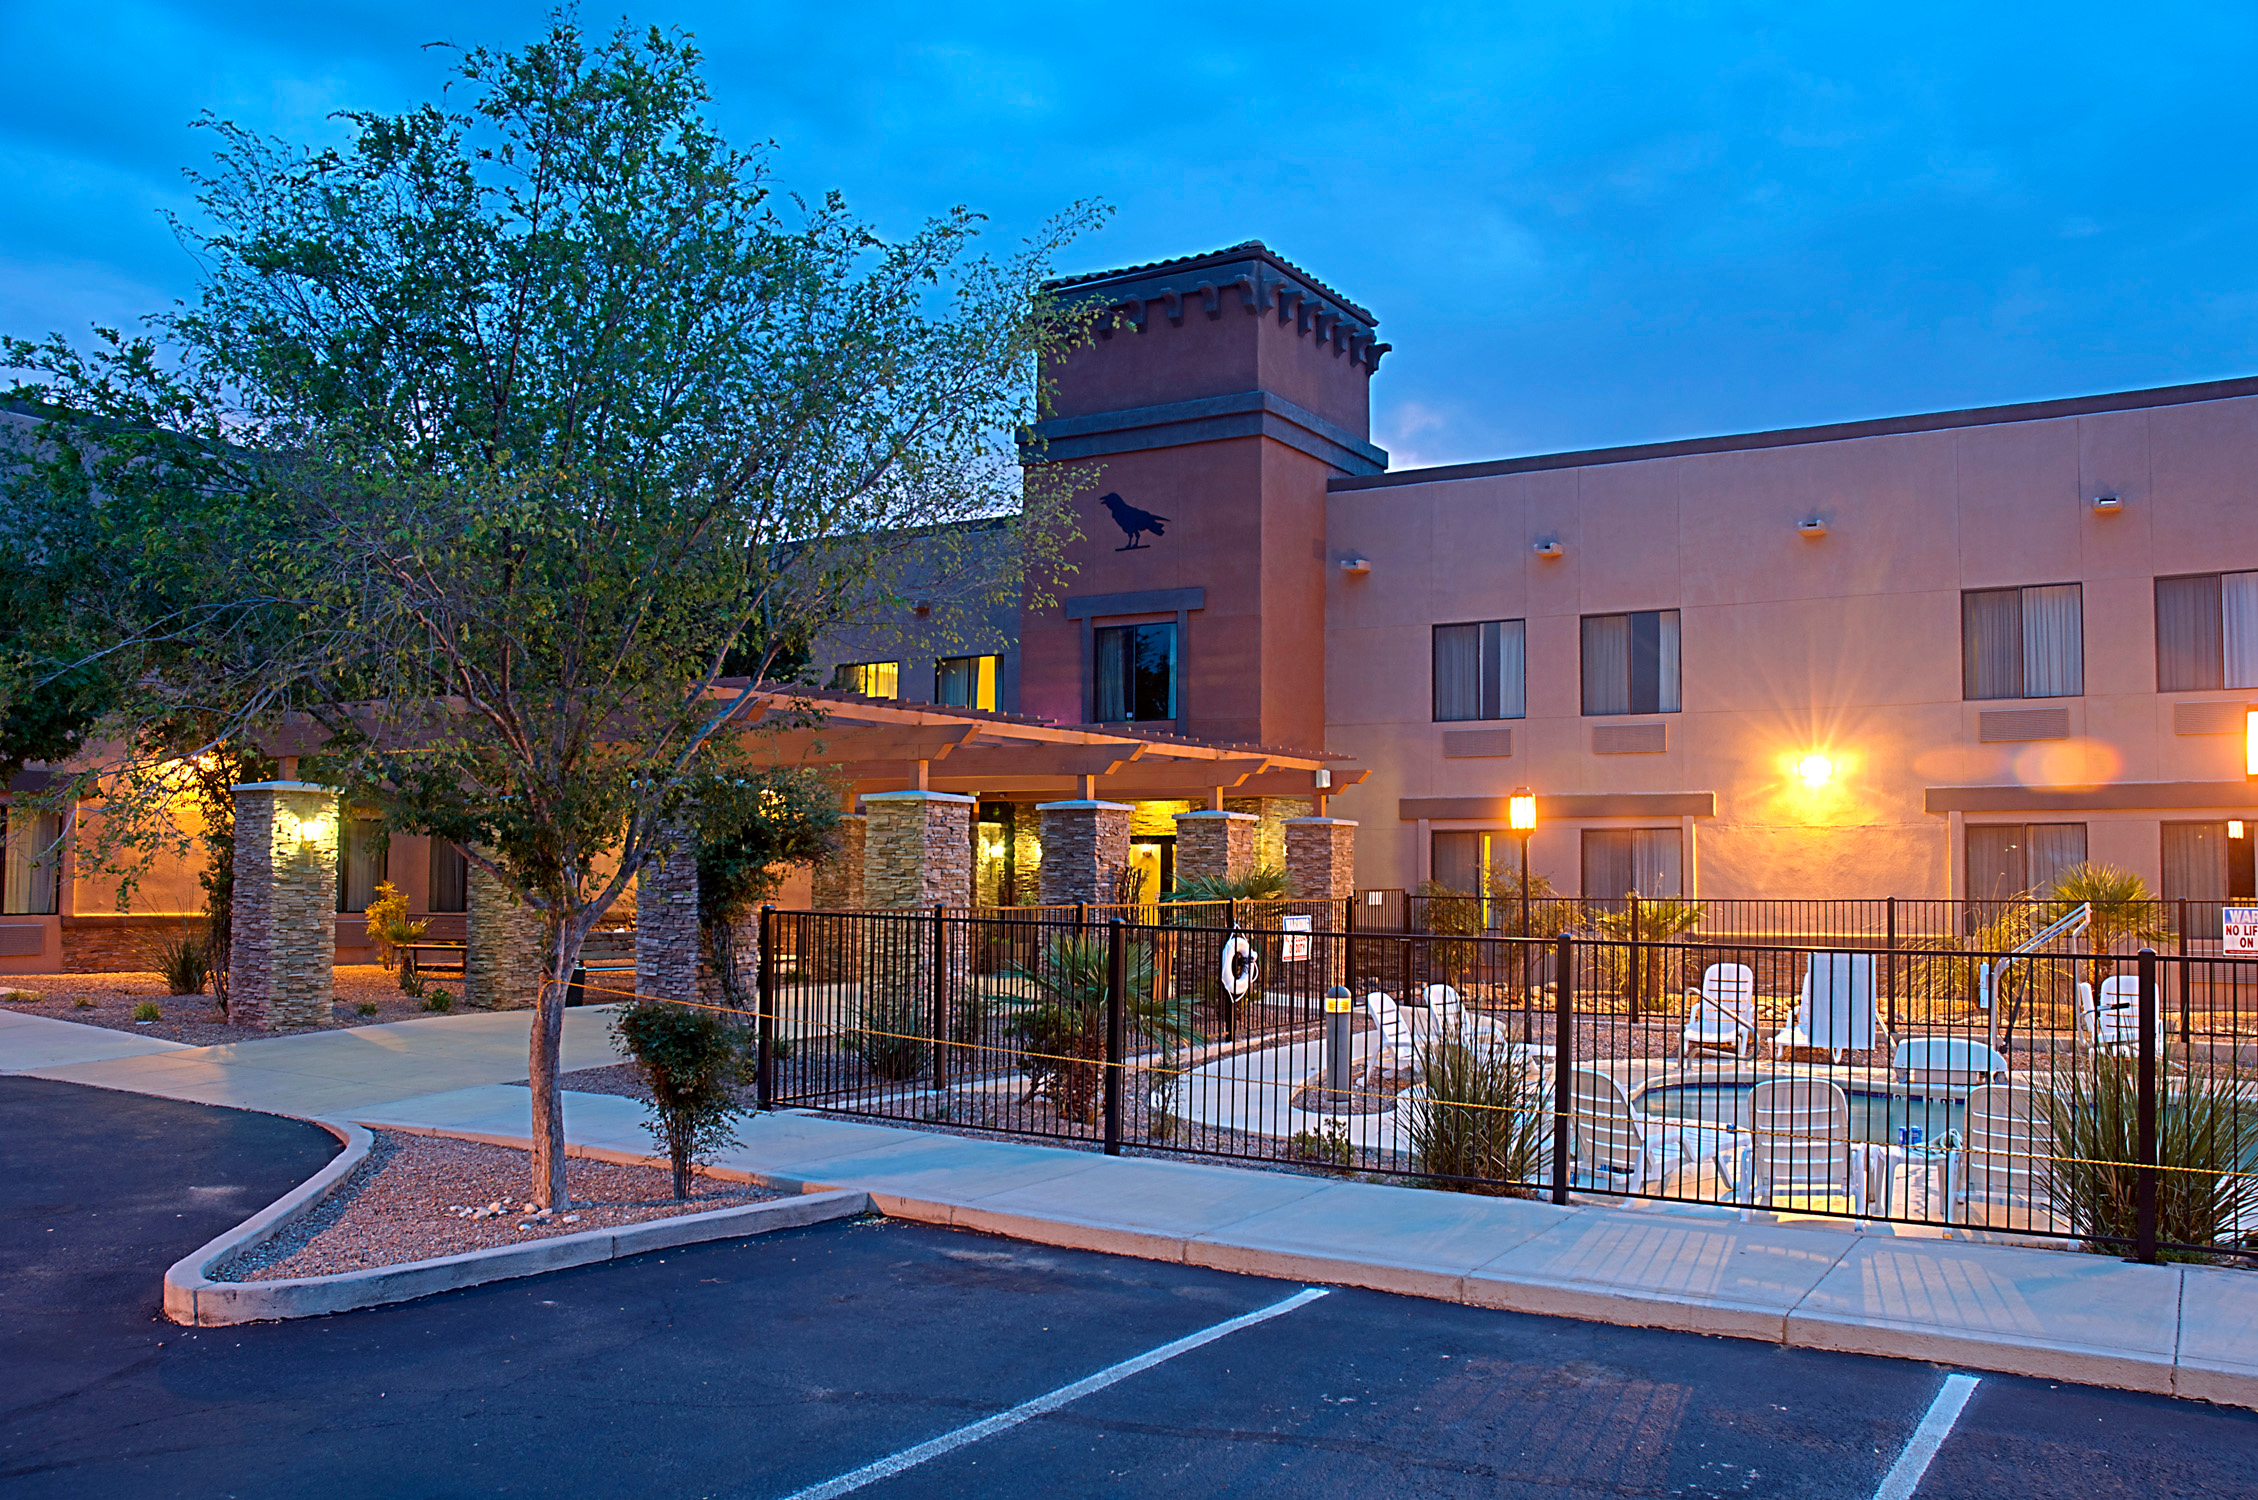 The Tombstone Grand Hotel Tombstone, Arizona - Hotels & Motels